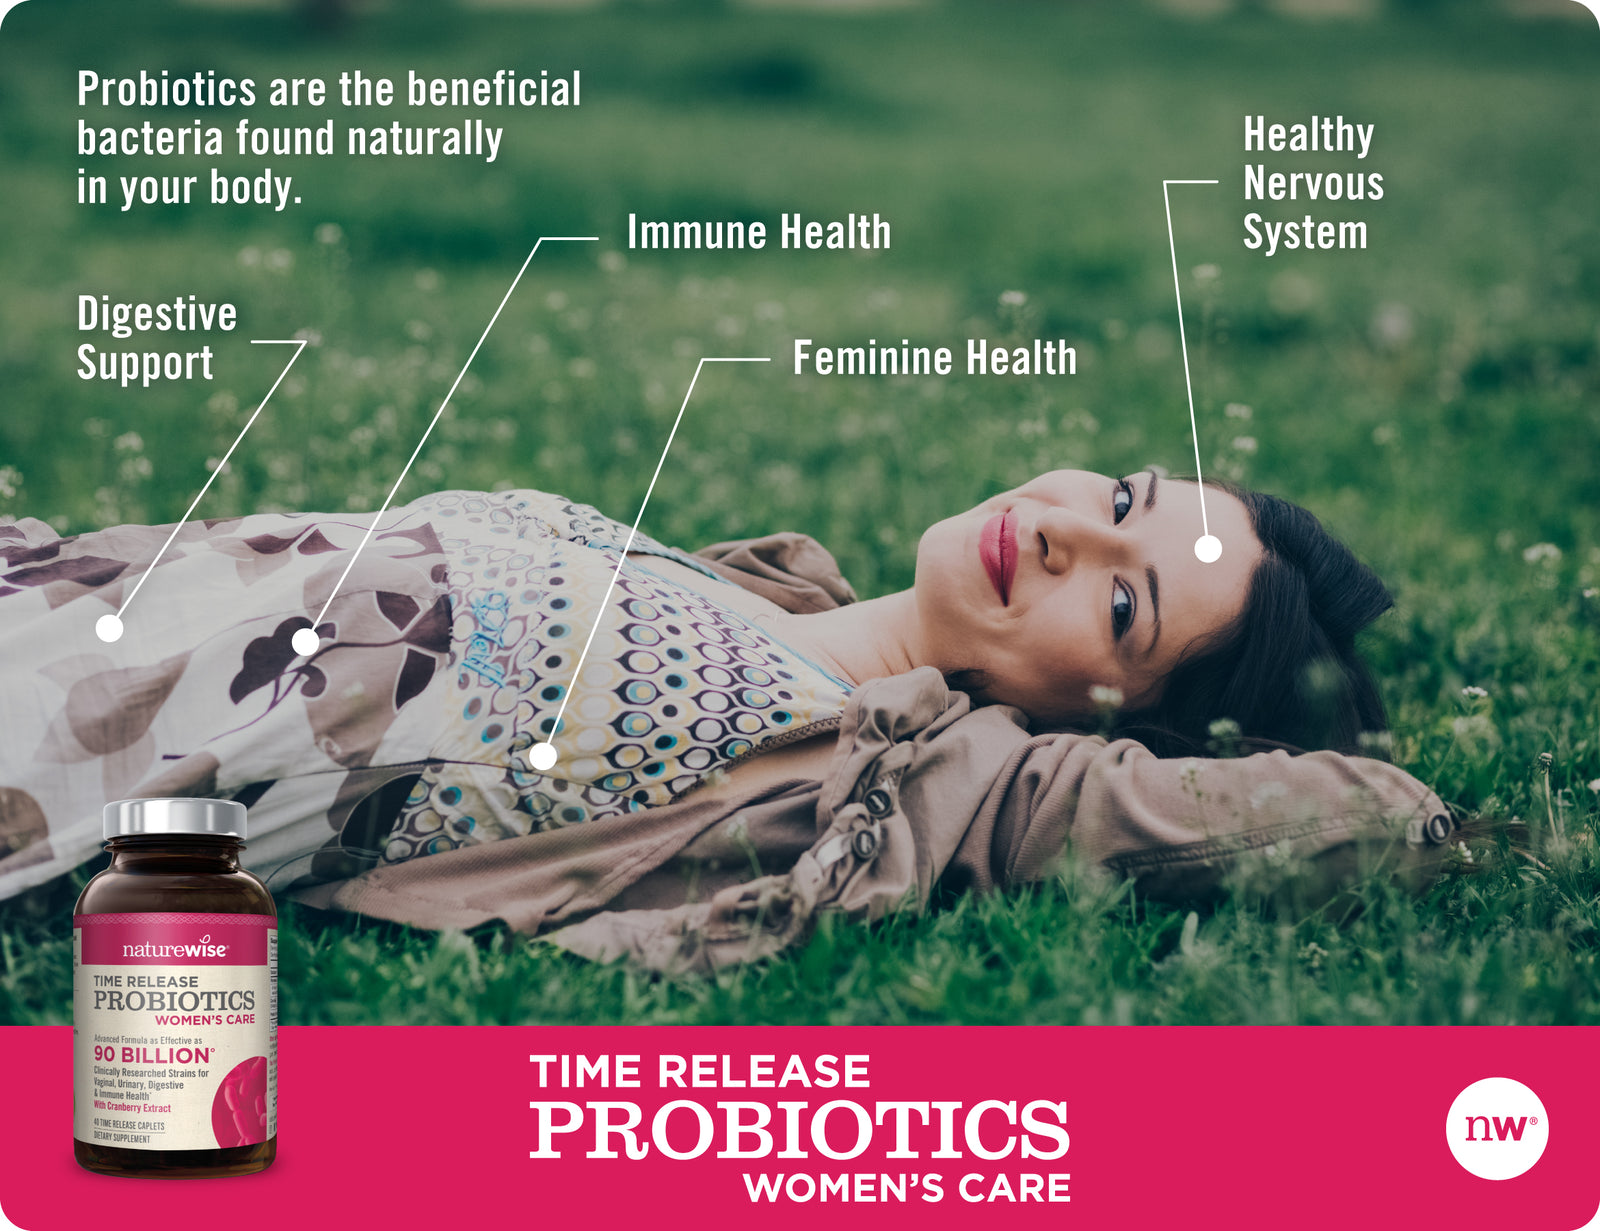 Women's Care Probiotics benefits 